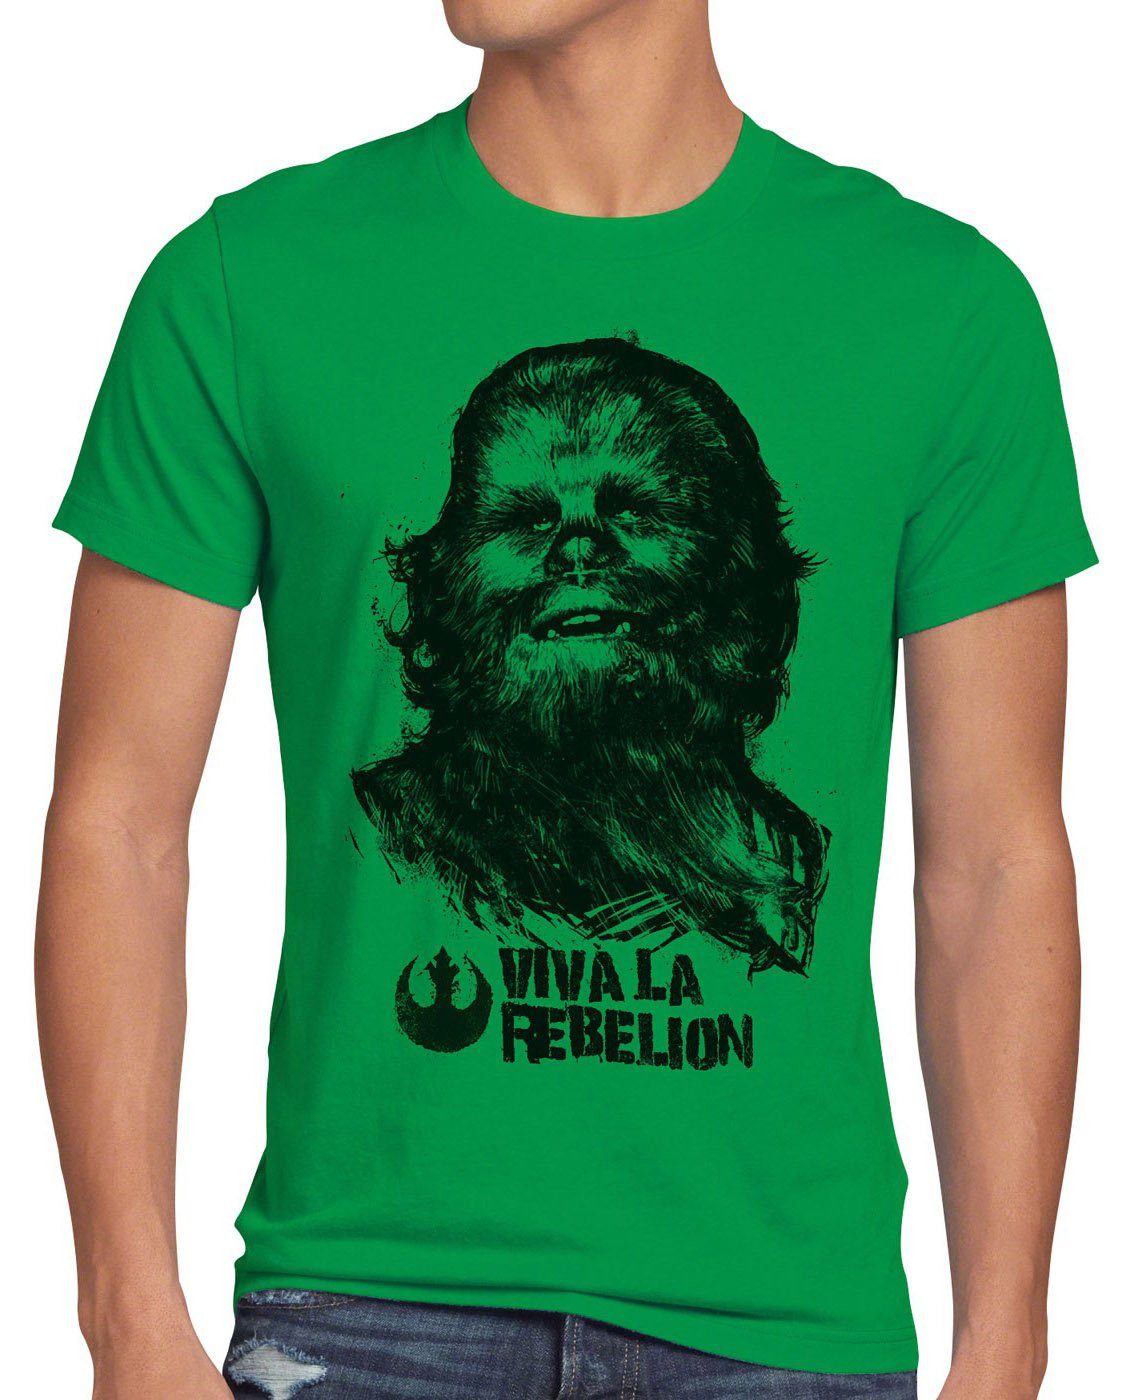 Print-Shirt darth LA REBELION wars che T-Shirt luke guervara vader style3 Herren VIVA grün chewbacca jedi star